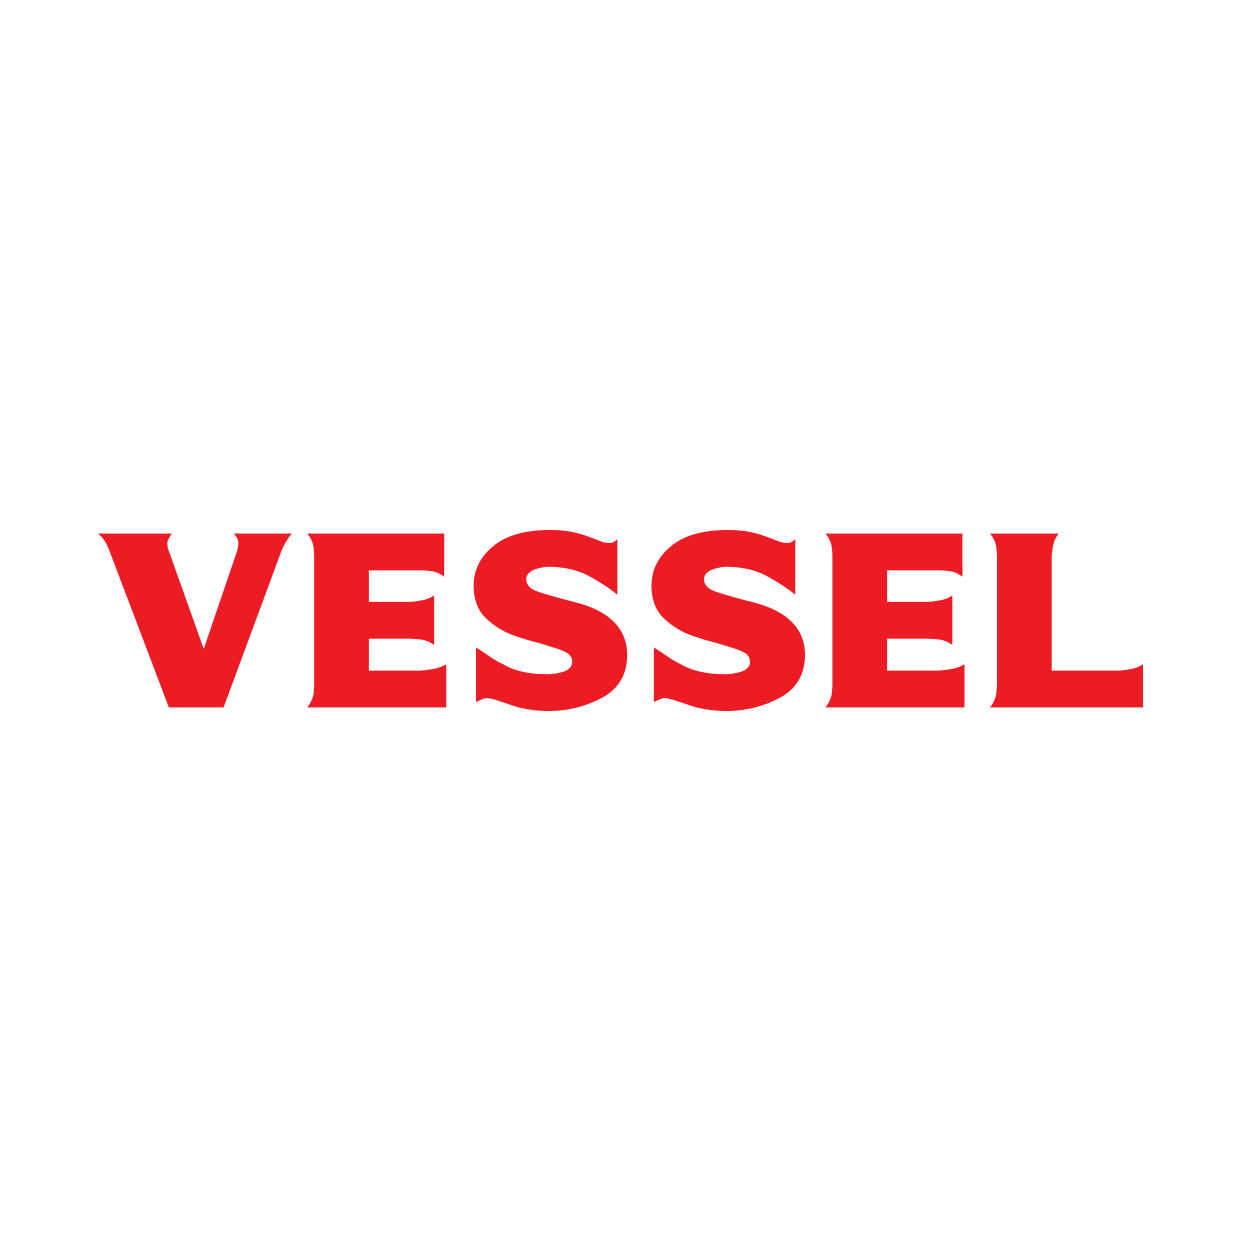 Vessel Logo - vessel-logo - JSR GROUP